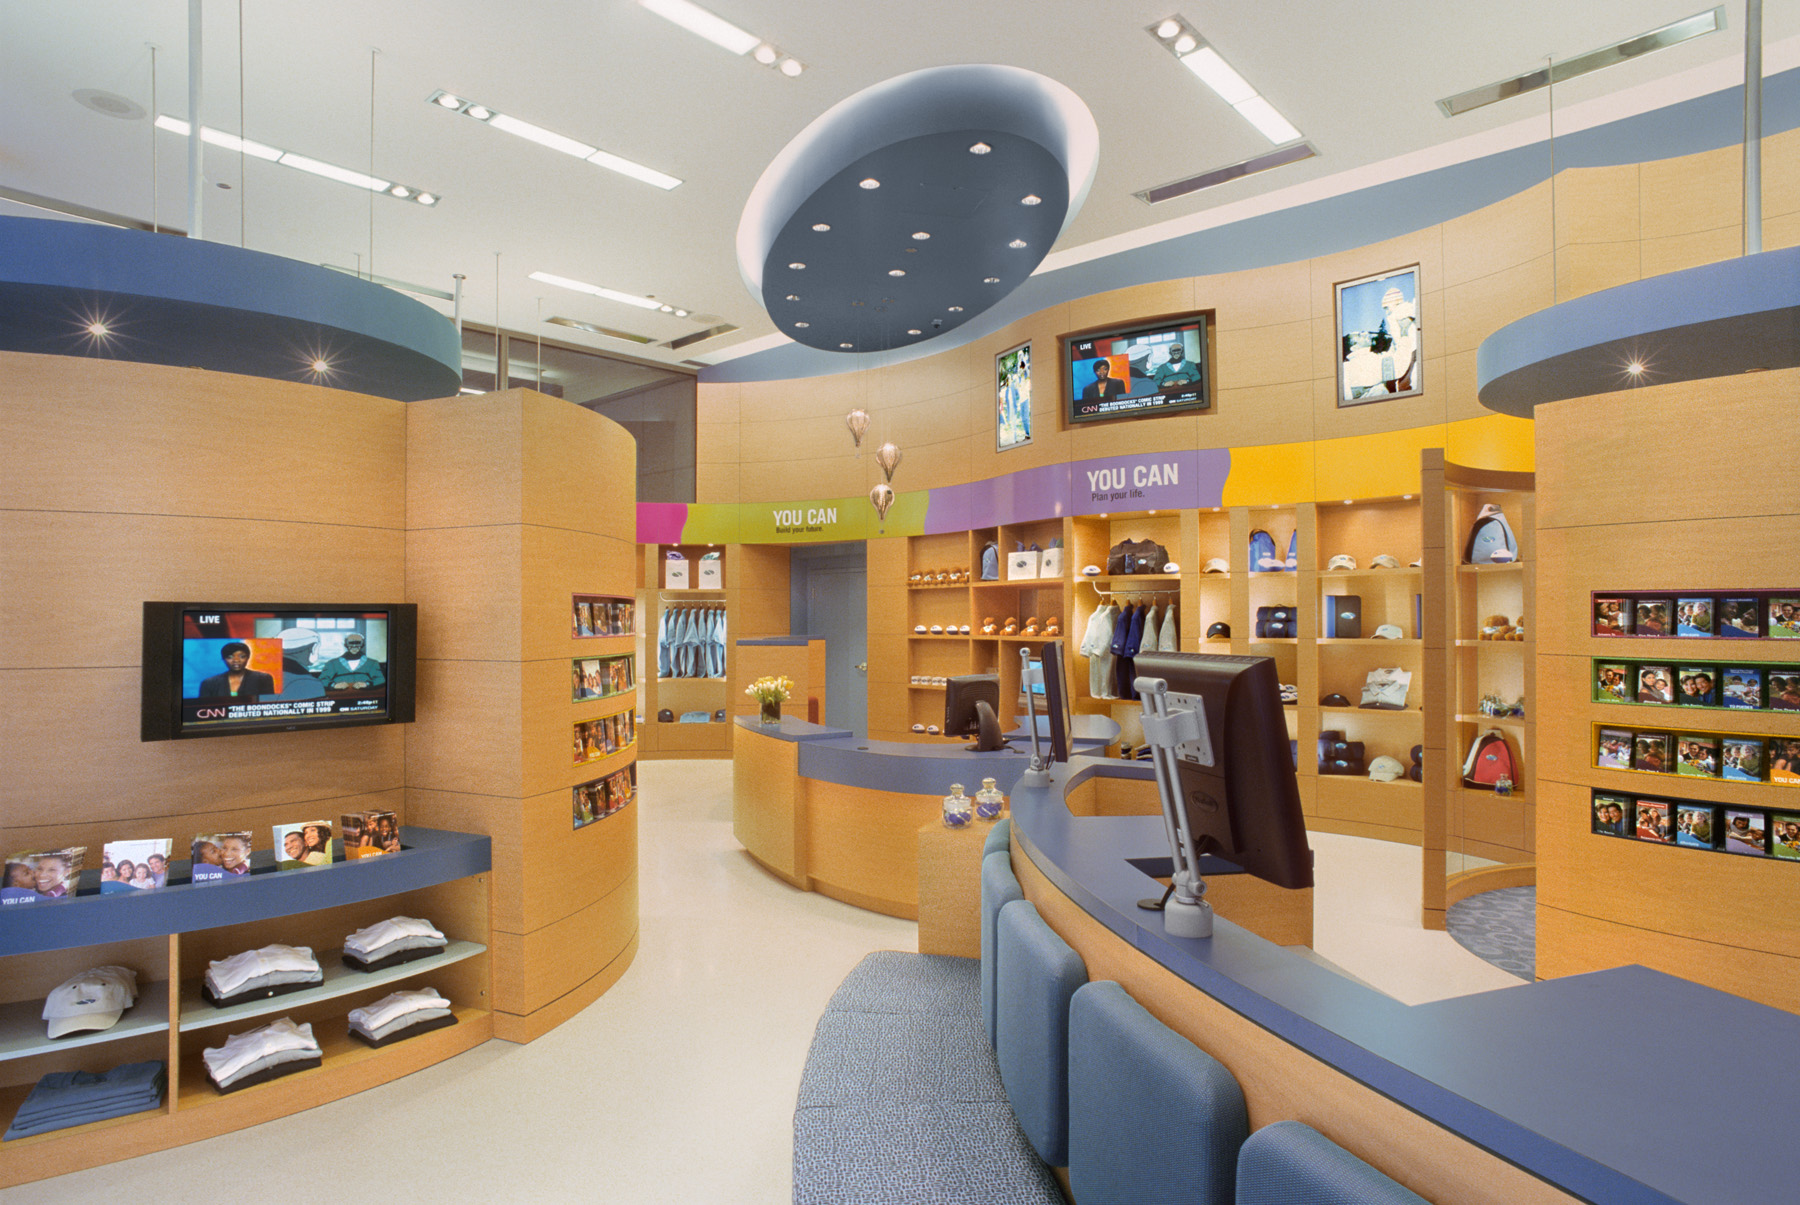 SBLI USA Financial Services - Retail Store. Tobin Parnes Design. Retail Design. Sales Area.